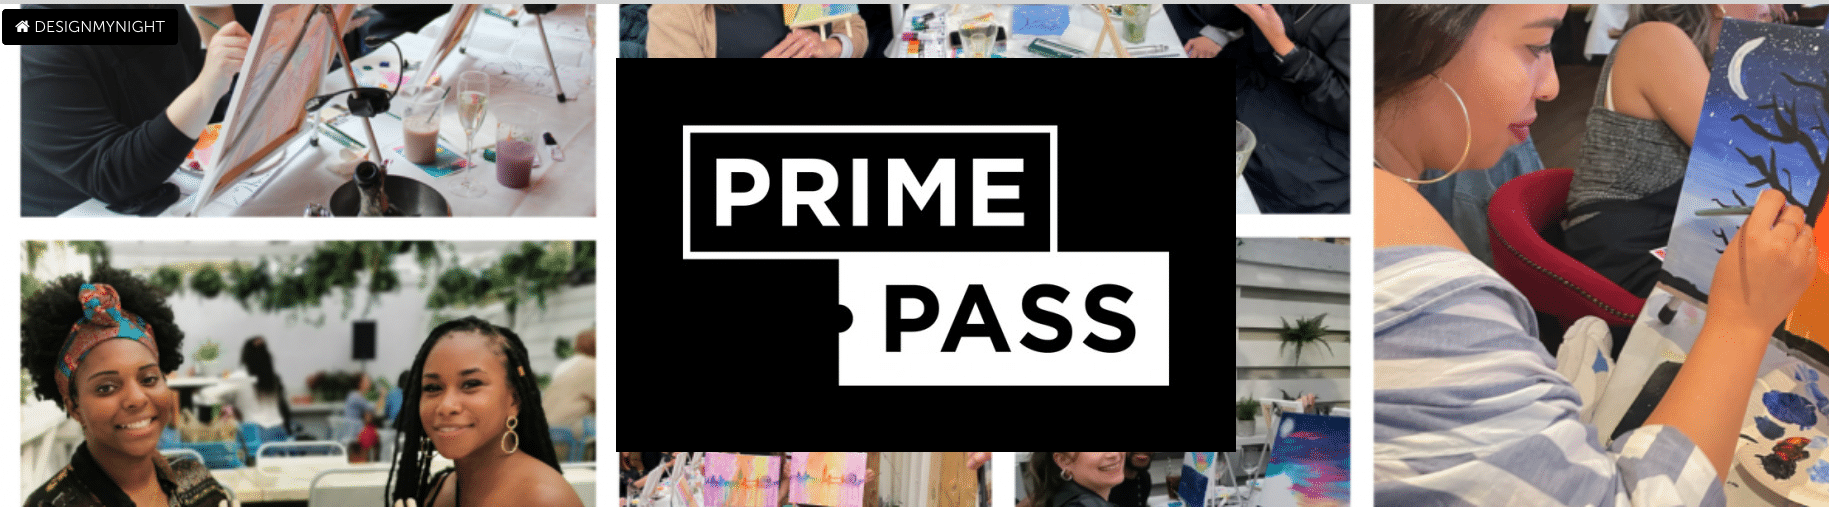 Prime Pass header image